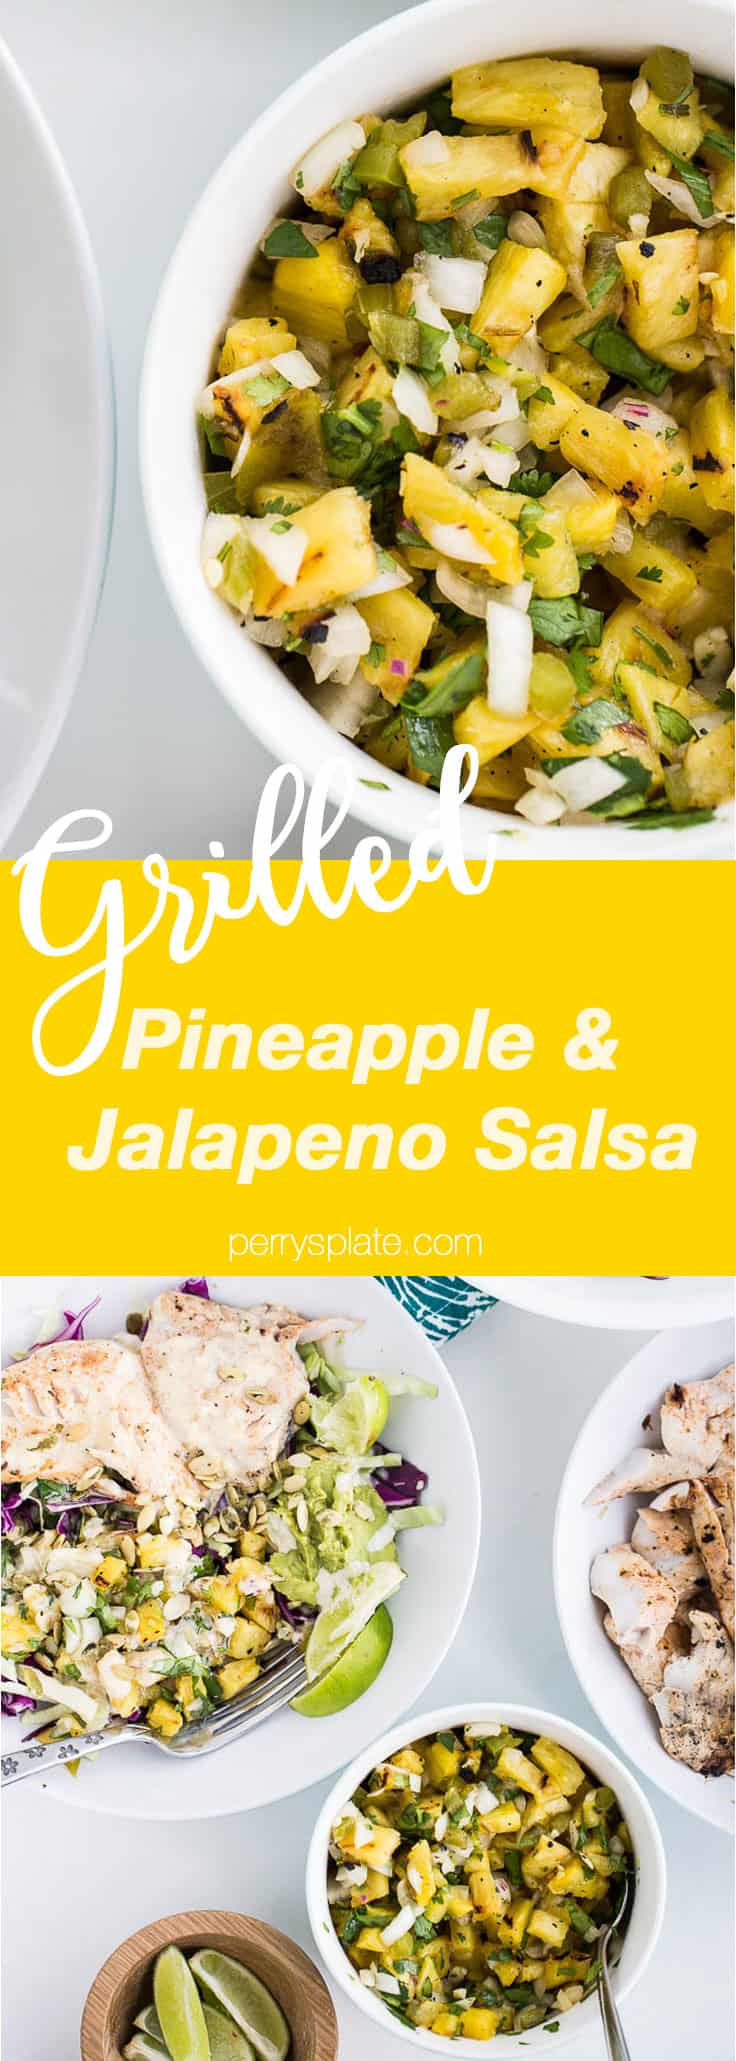 Grilled Pineapple & Jalapeno Salsa | salsa recipes | paleo recipes | whole30 recipes | summer grilling recipes | perrysplate.com